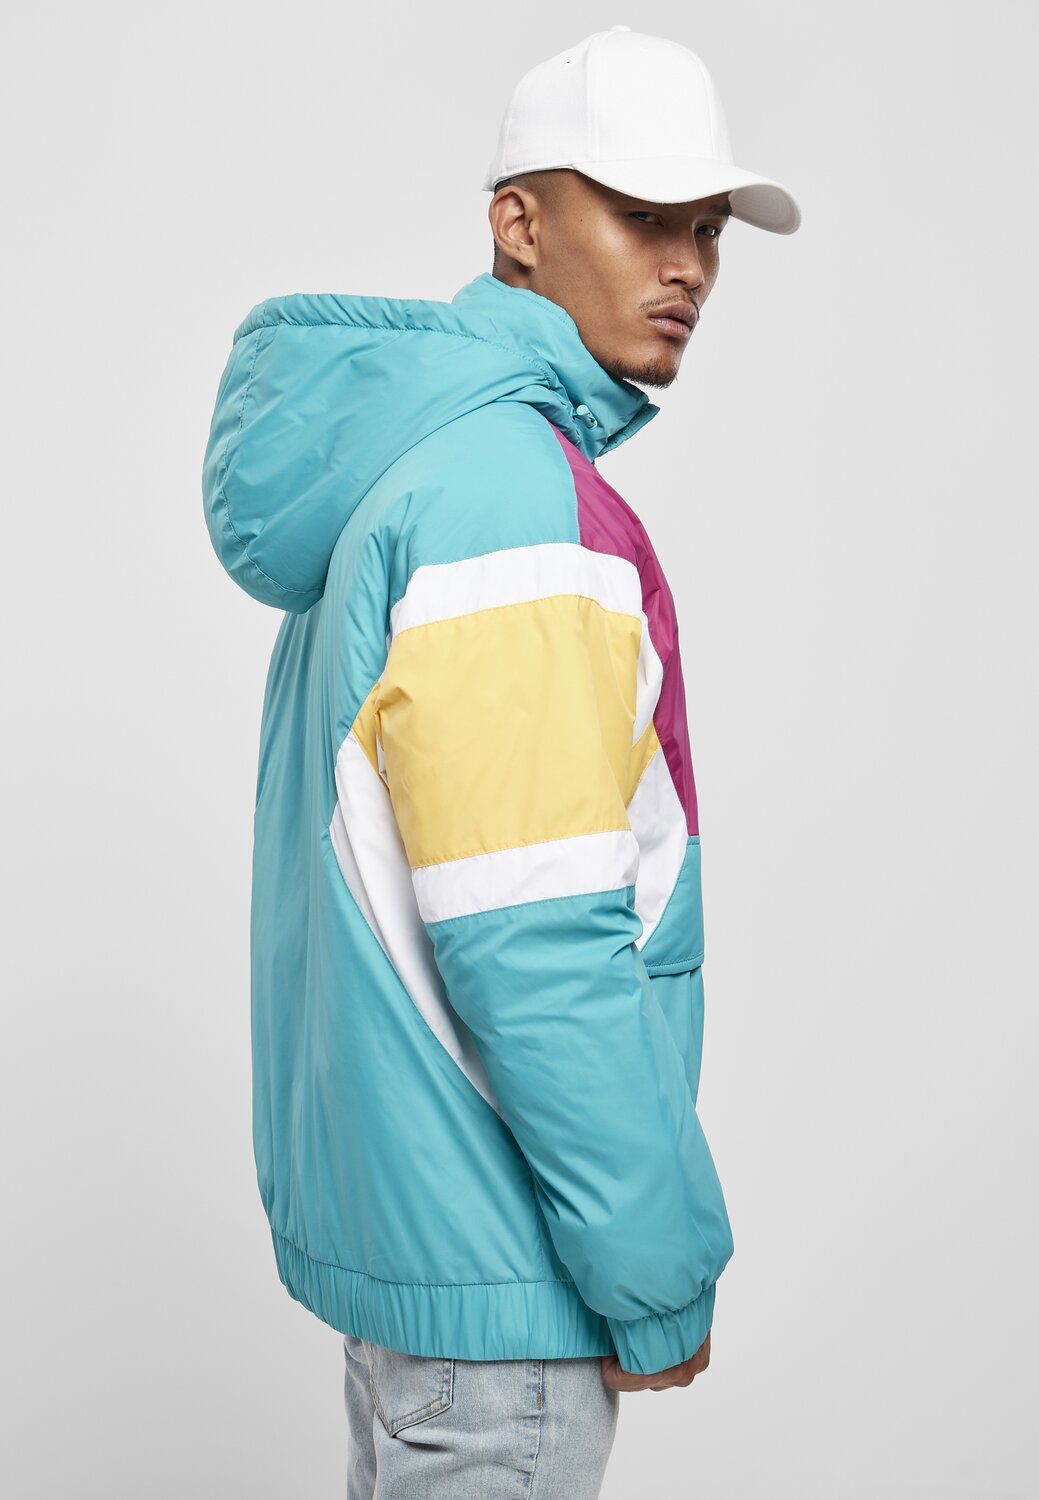 Starter jacket turquoise blue/pink/yellow/white | MAXISCOOT | Übergangsjacken